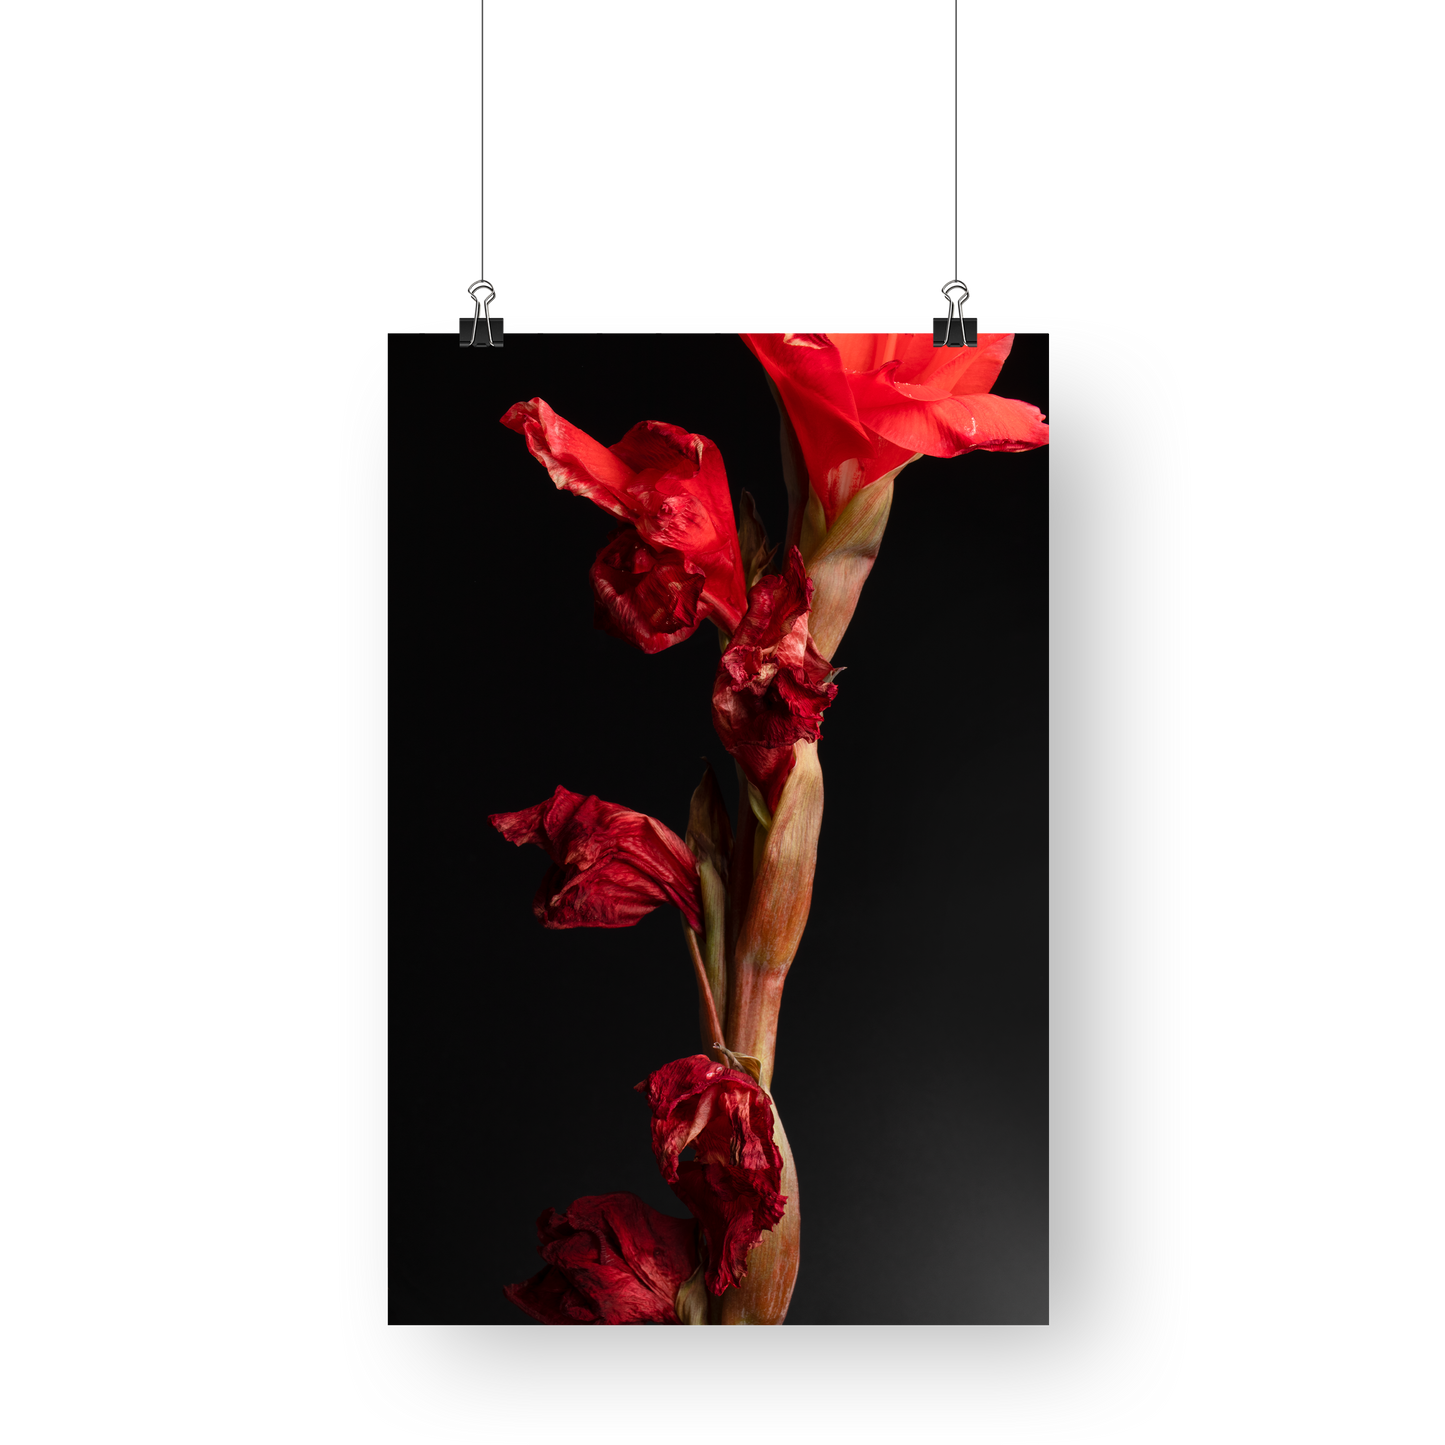 Bleeding Heart -  Still Life Photography Floral Fine Art - Wall Art Metal or Acrylic Print